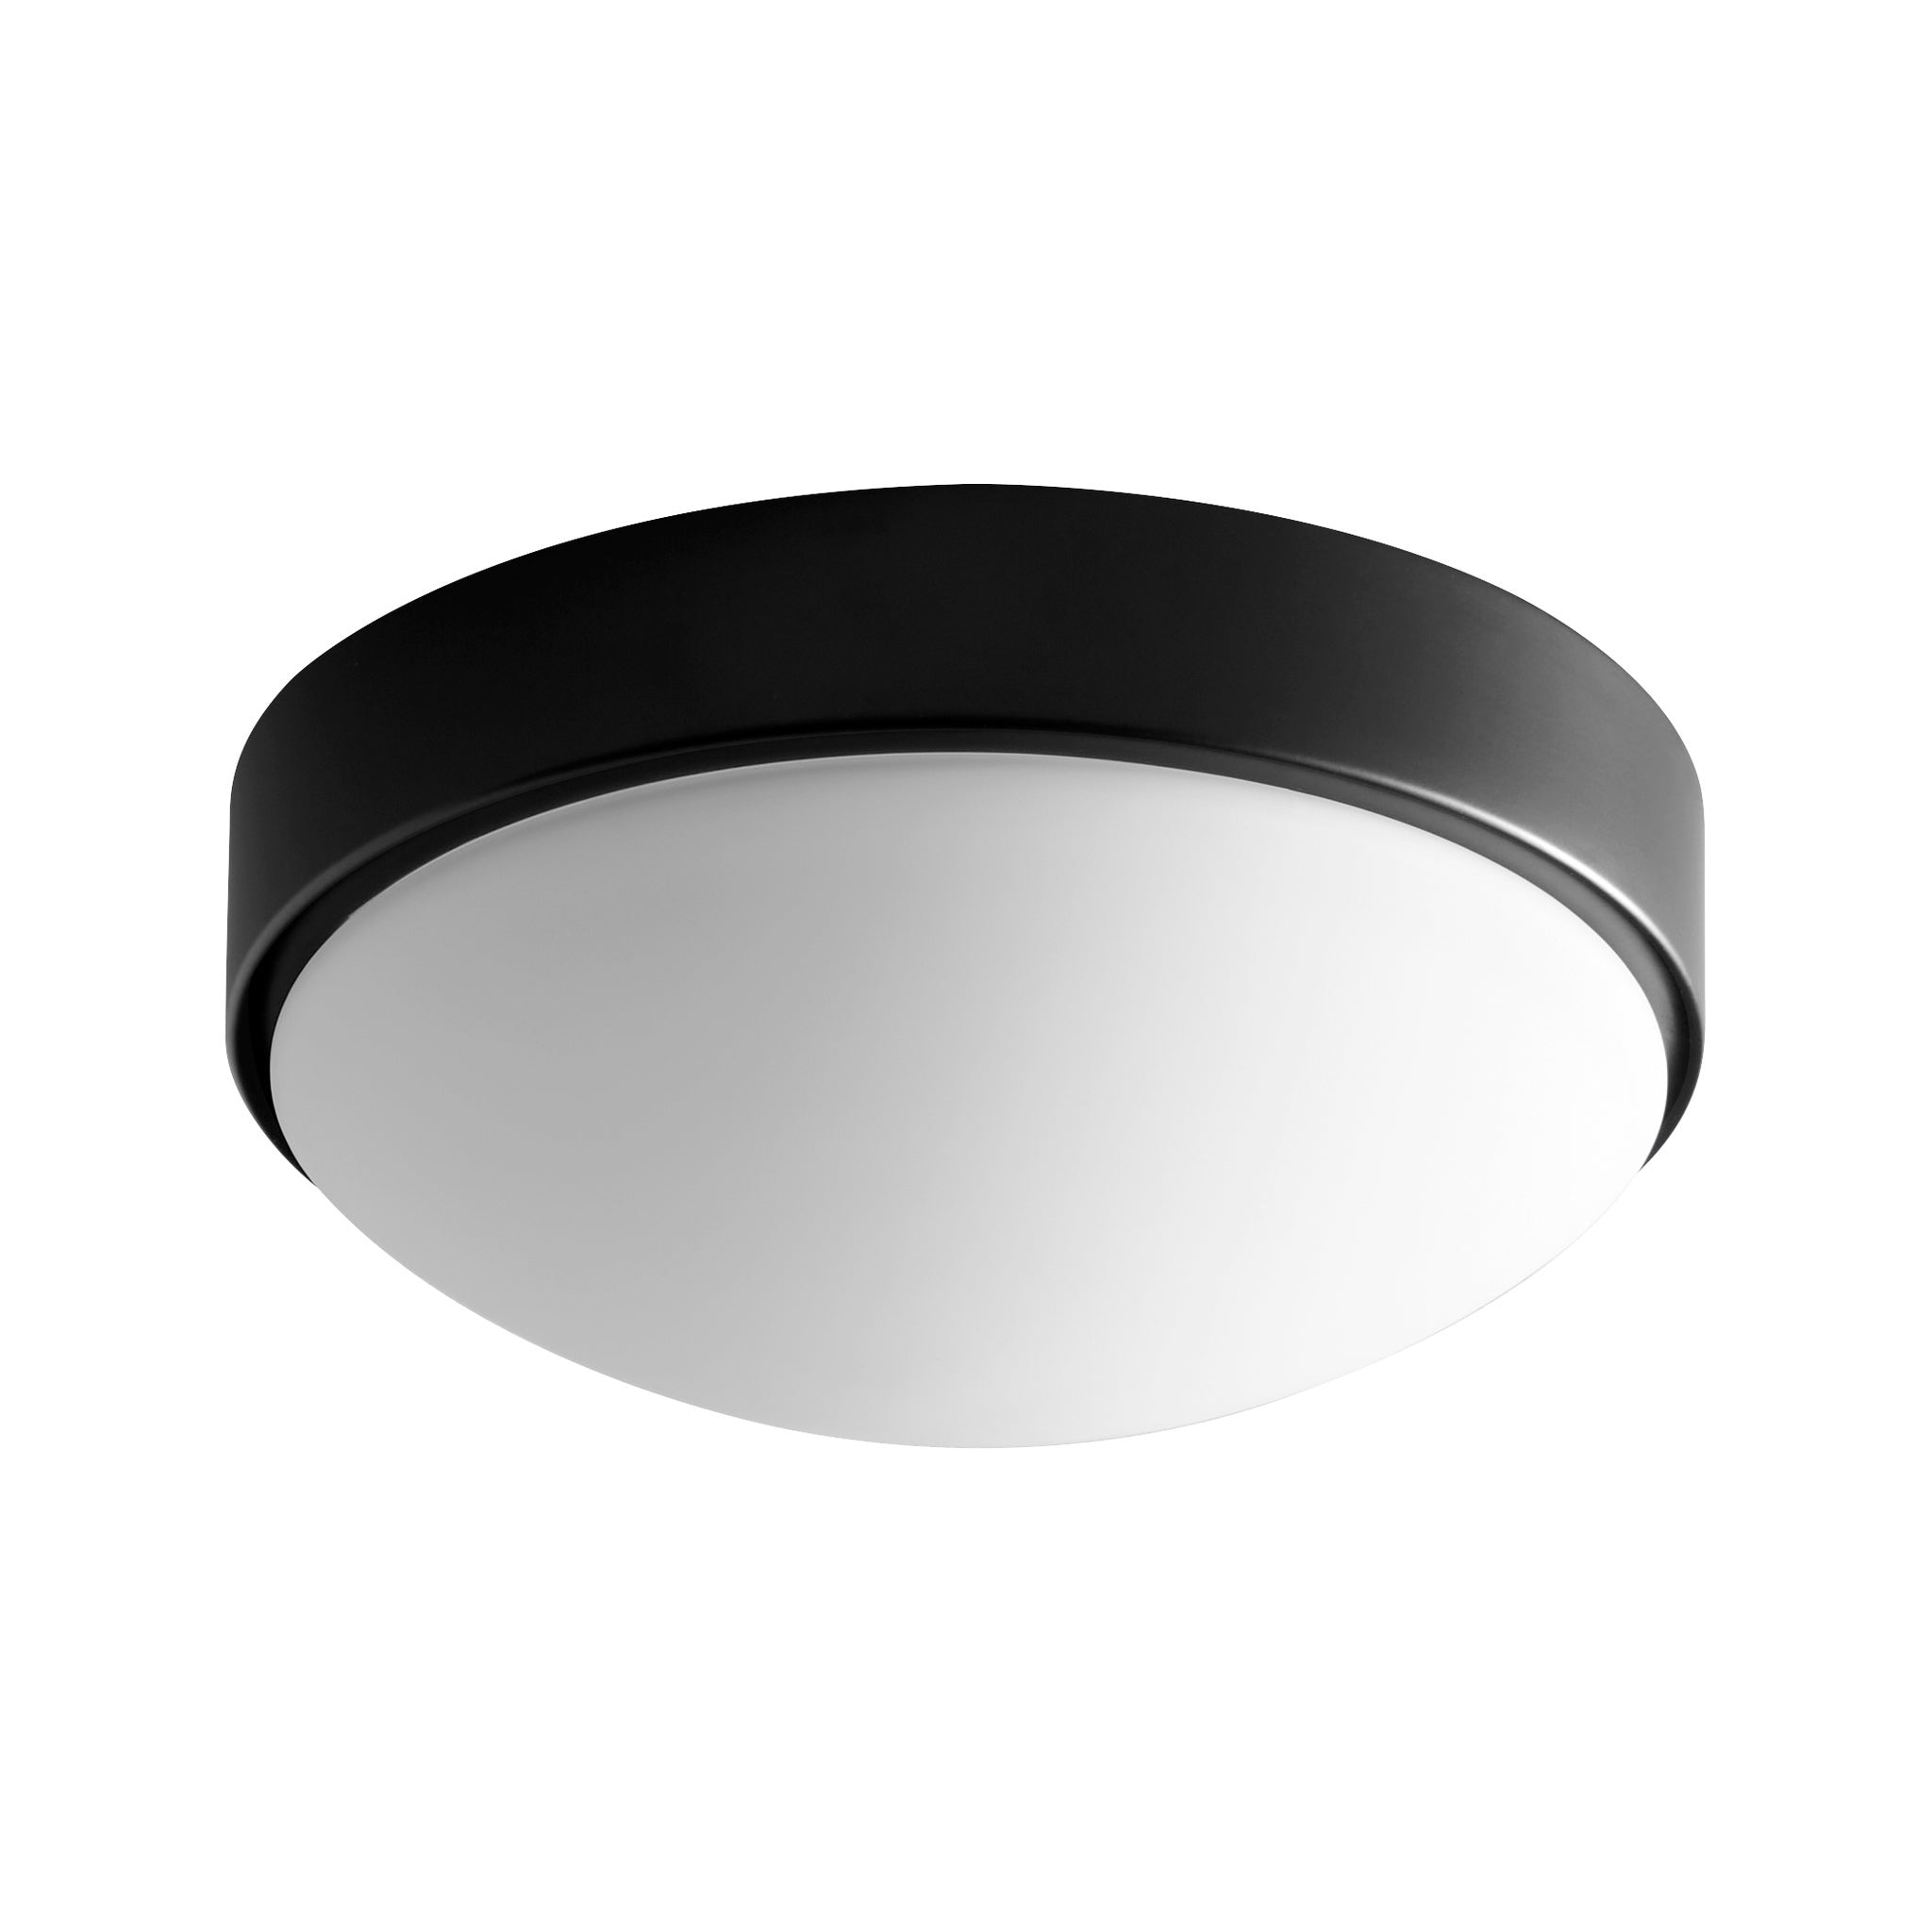 Oxygen JOURNEY Round Flush Mount Ceiling Light Fixture, 11 Inch - Black, White Opal Glass